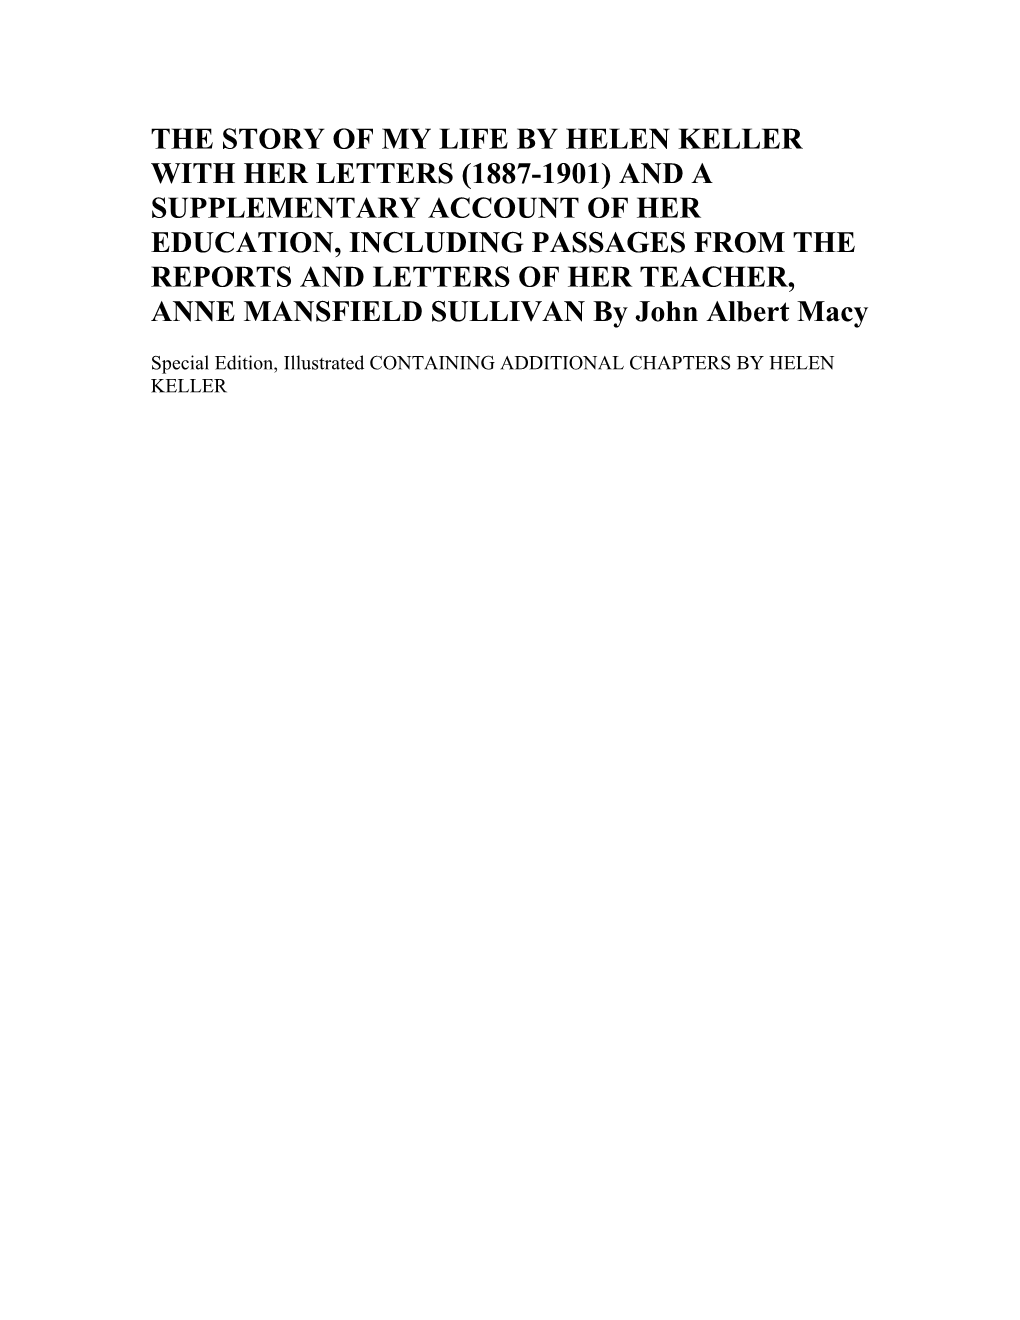 THE STORY of MY LIFE by Helen Keller, Ann Mansfield Sullivan, John Albert Macy